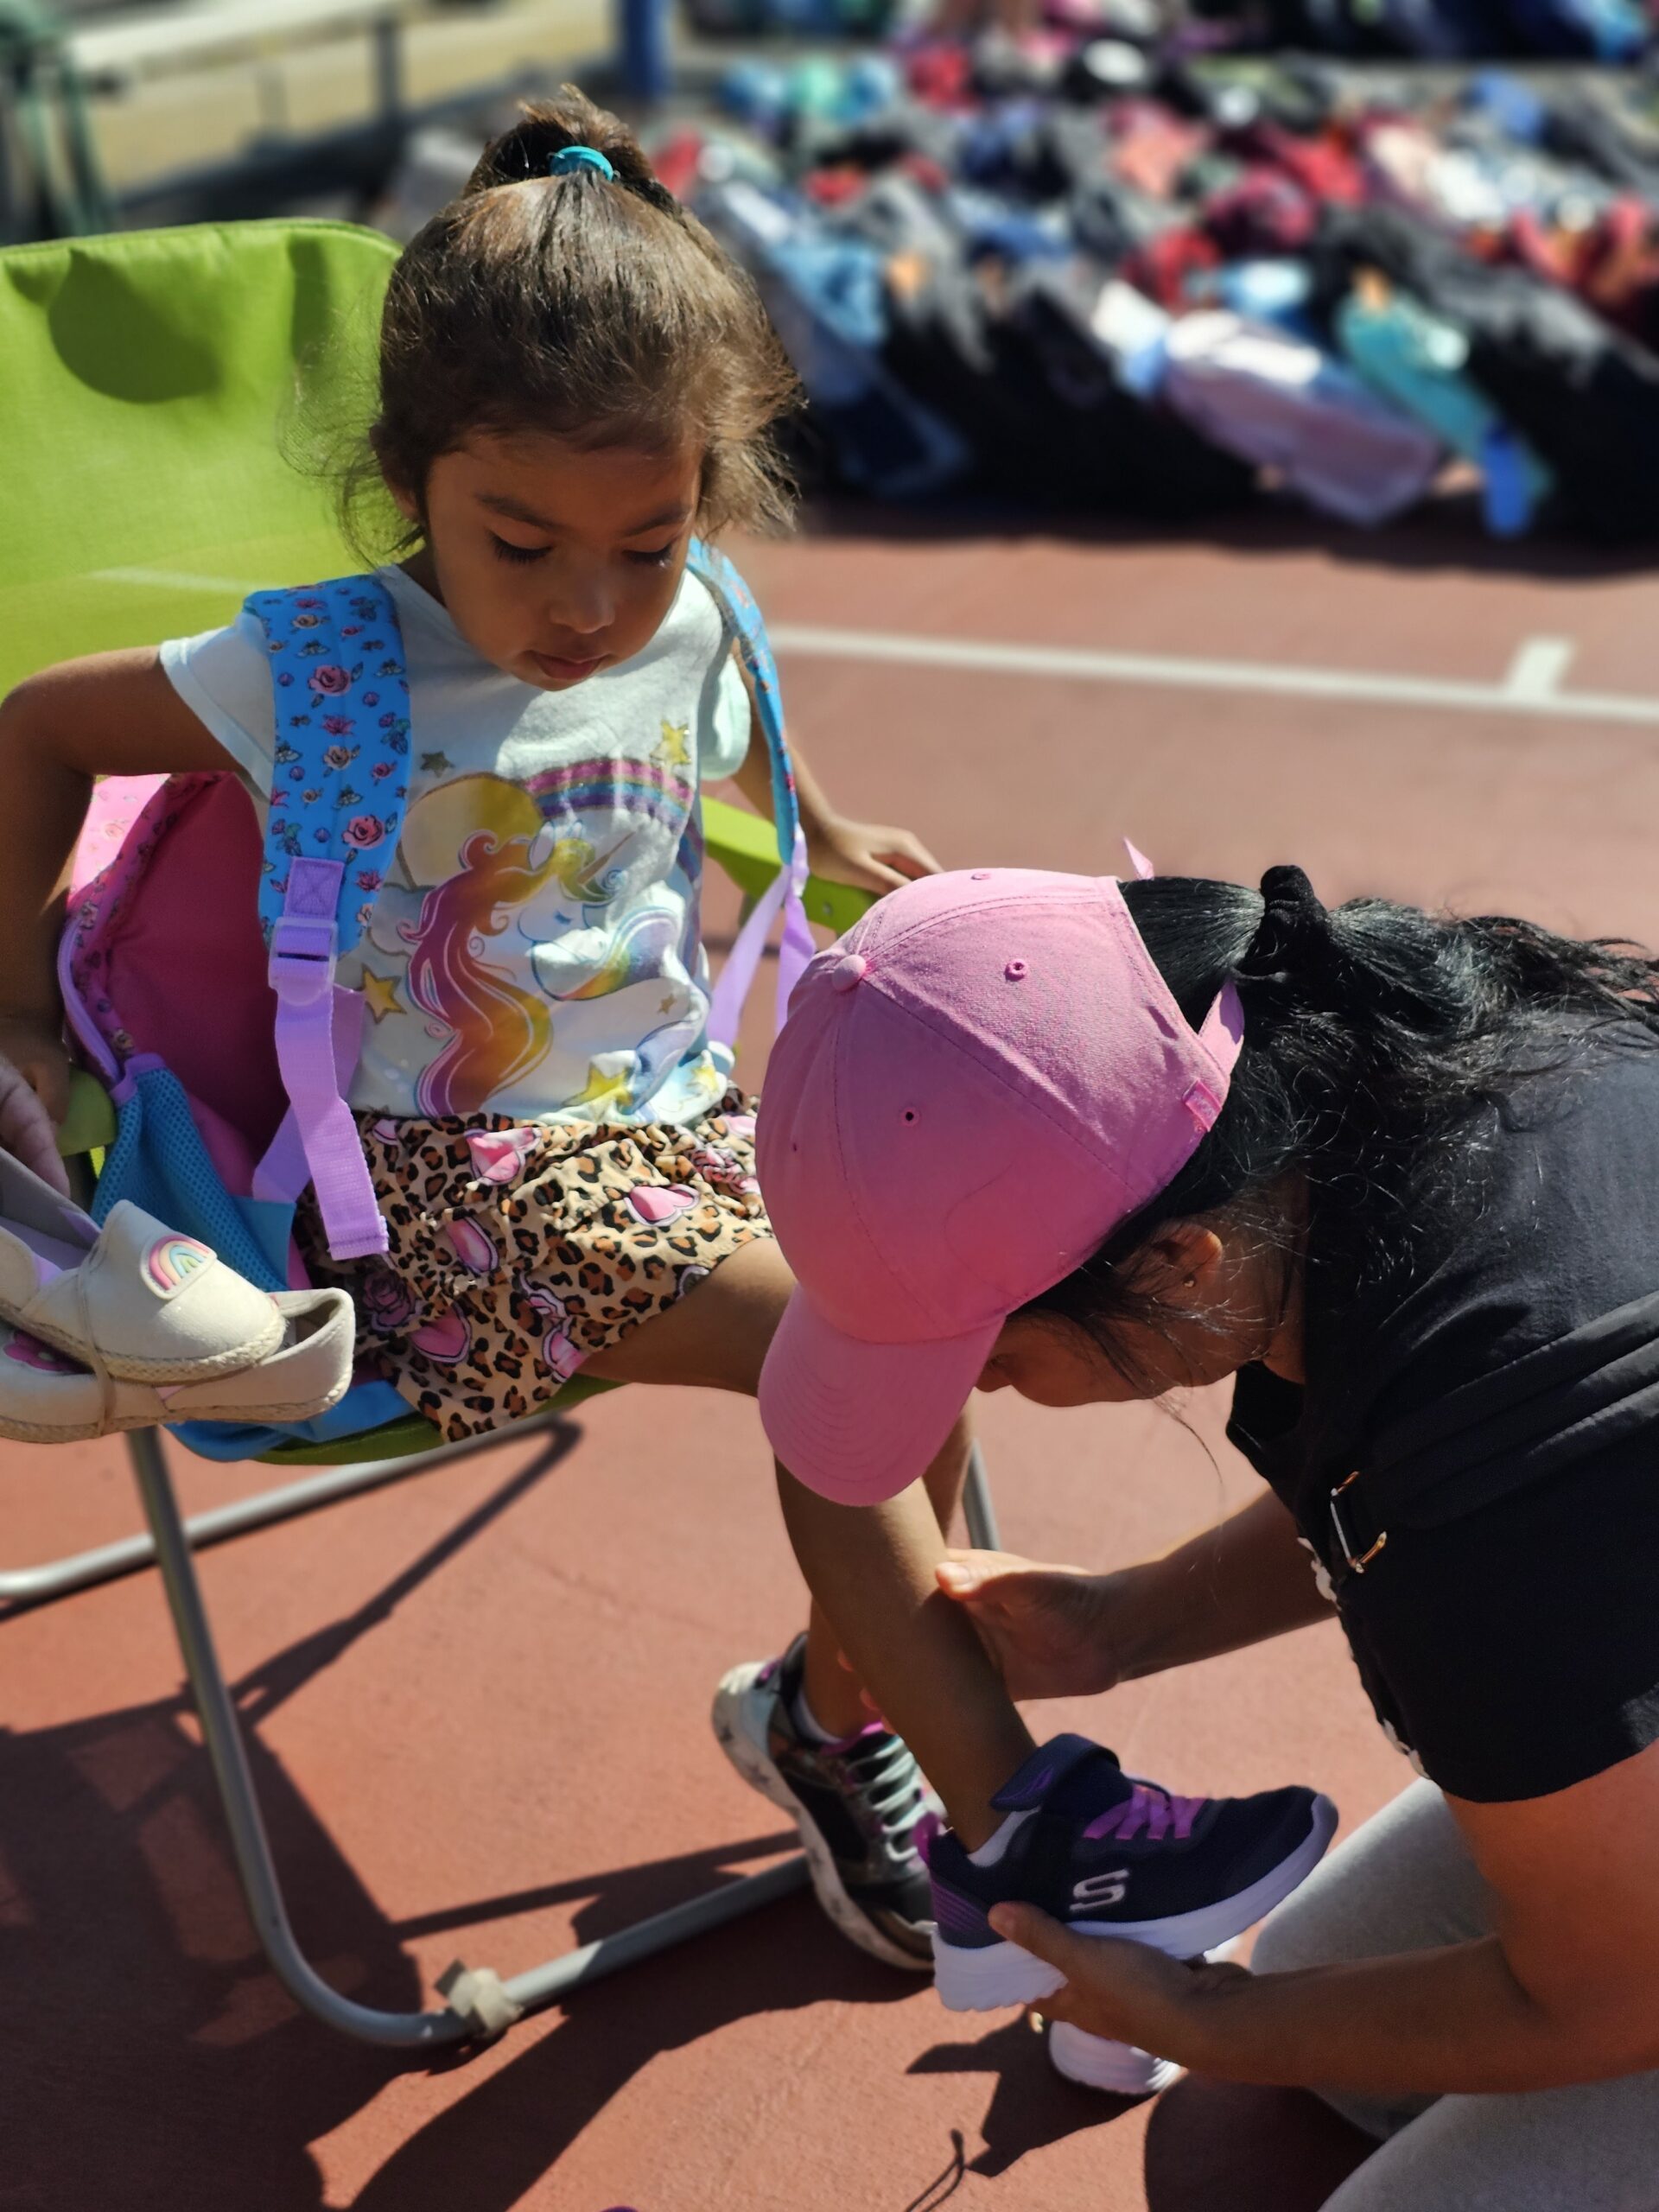 Lunch Break volunteer helping a child put on her shoe.